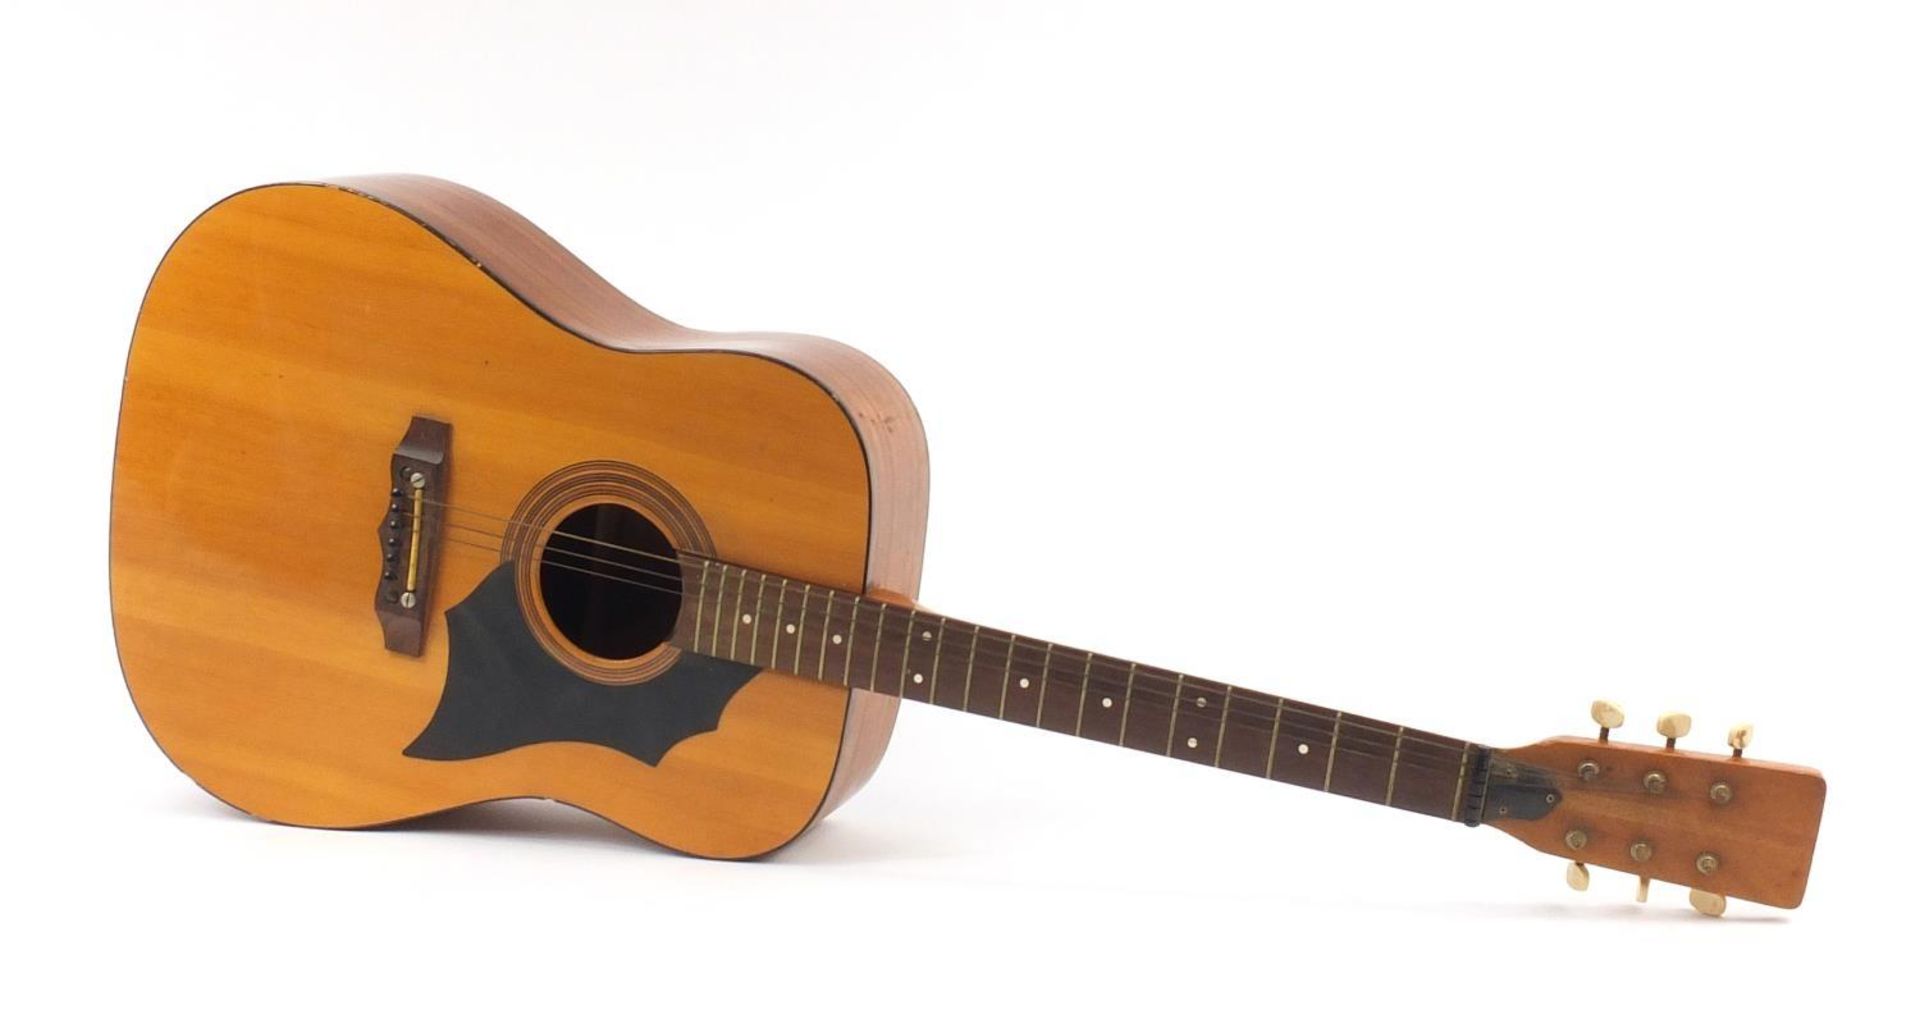 Italian six string acoustic guitar model KD28/D, 105cm in length - Image 2 of 4